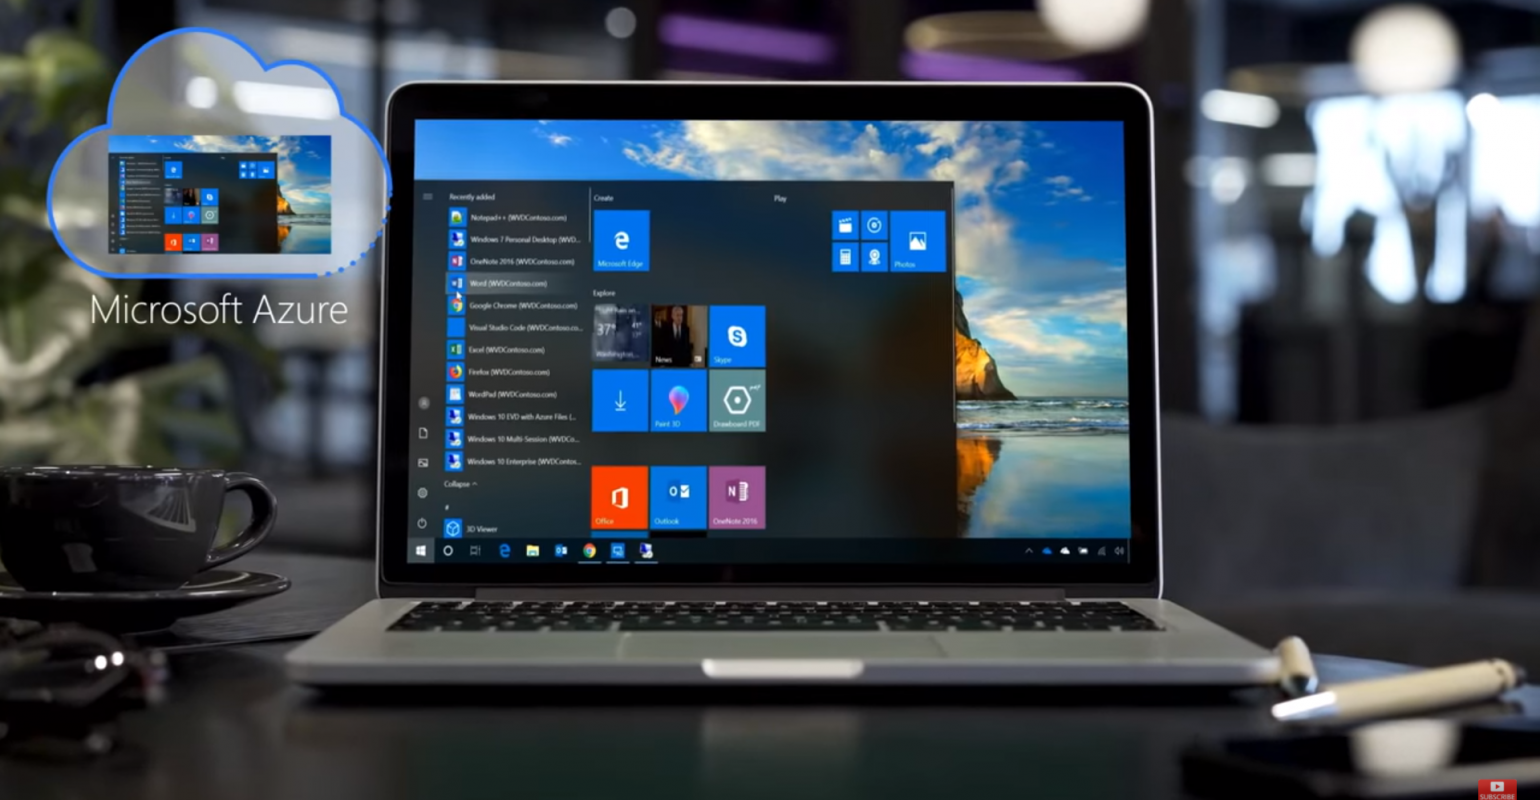 Microsoft Azure on a laptop